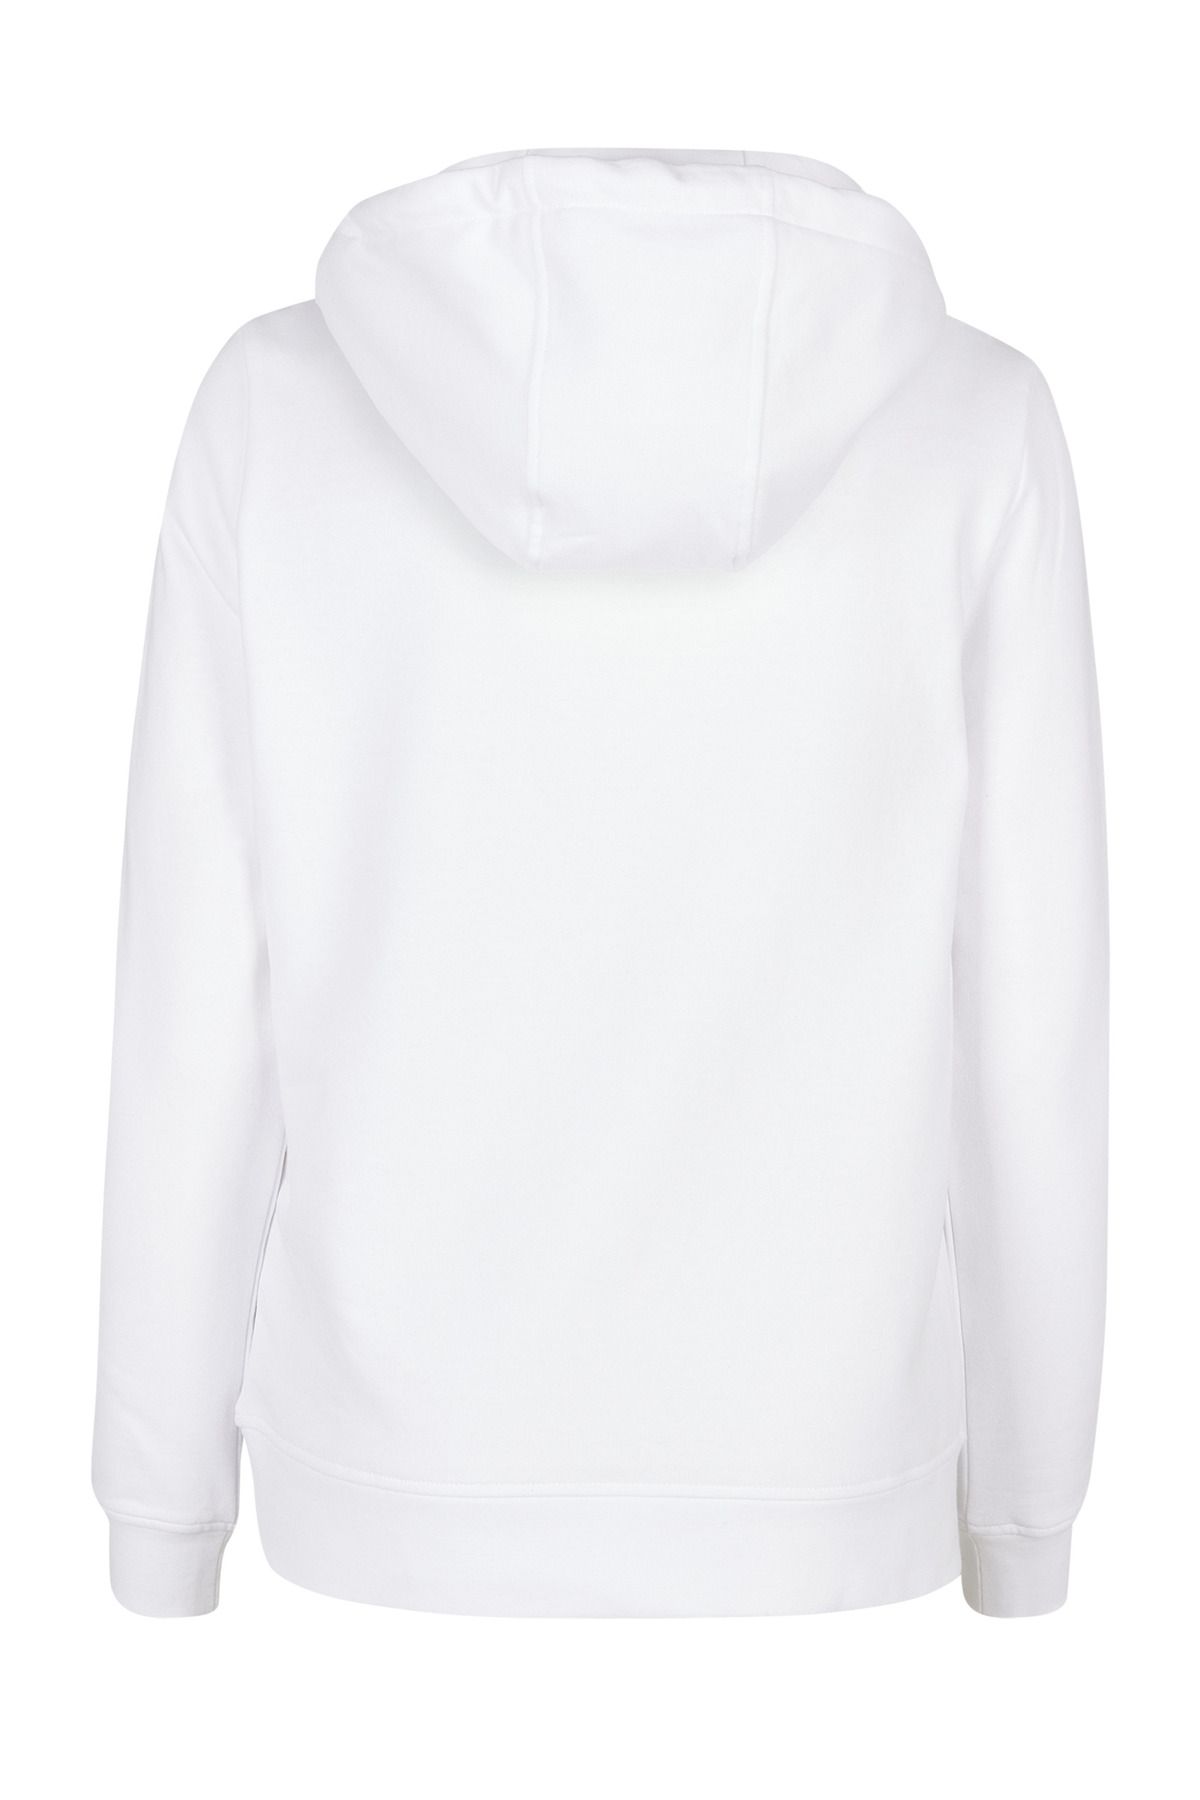 - Fit - Regular F4NT4STIC Trendyol - Sweatshirt Weiß